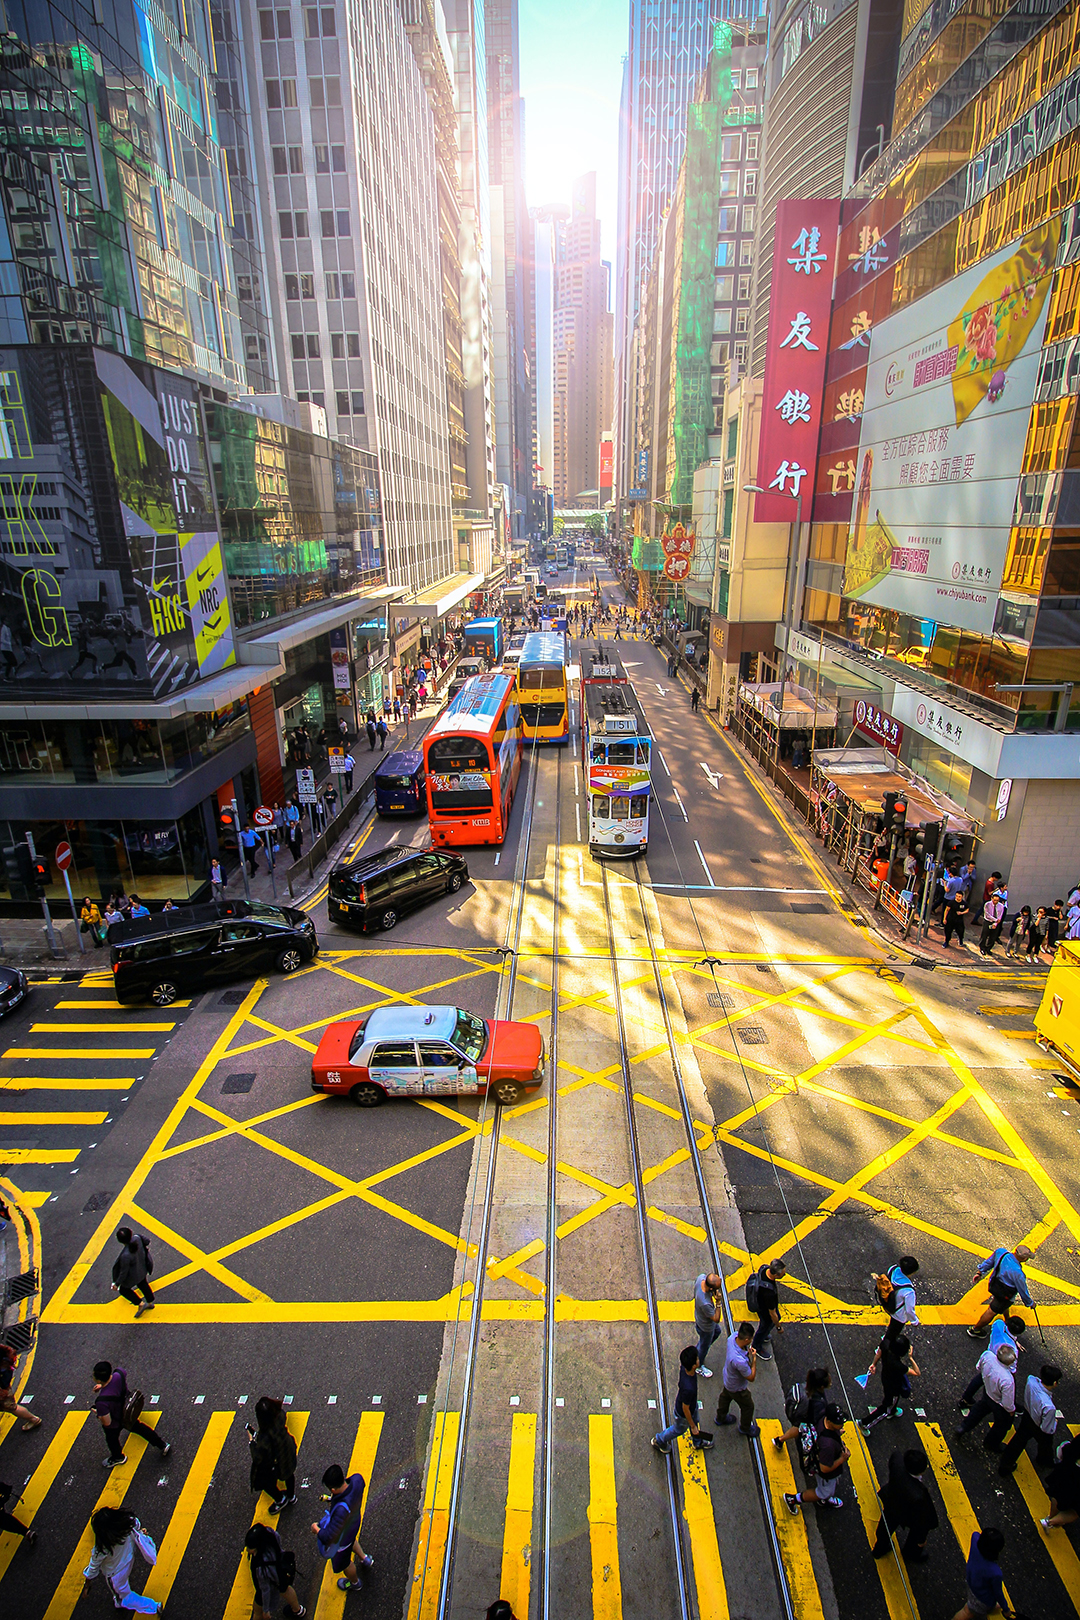 Potovanje_v_Hong_Kong_-_Travel_to_Hong_Kong_-_Photo_by_Florian_Wehde_on_Unsplash.jpg